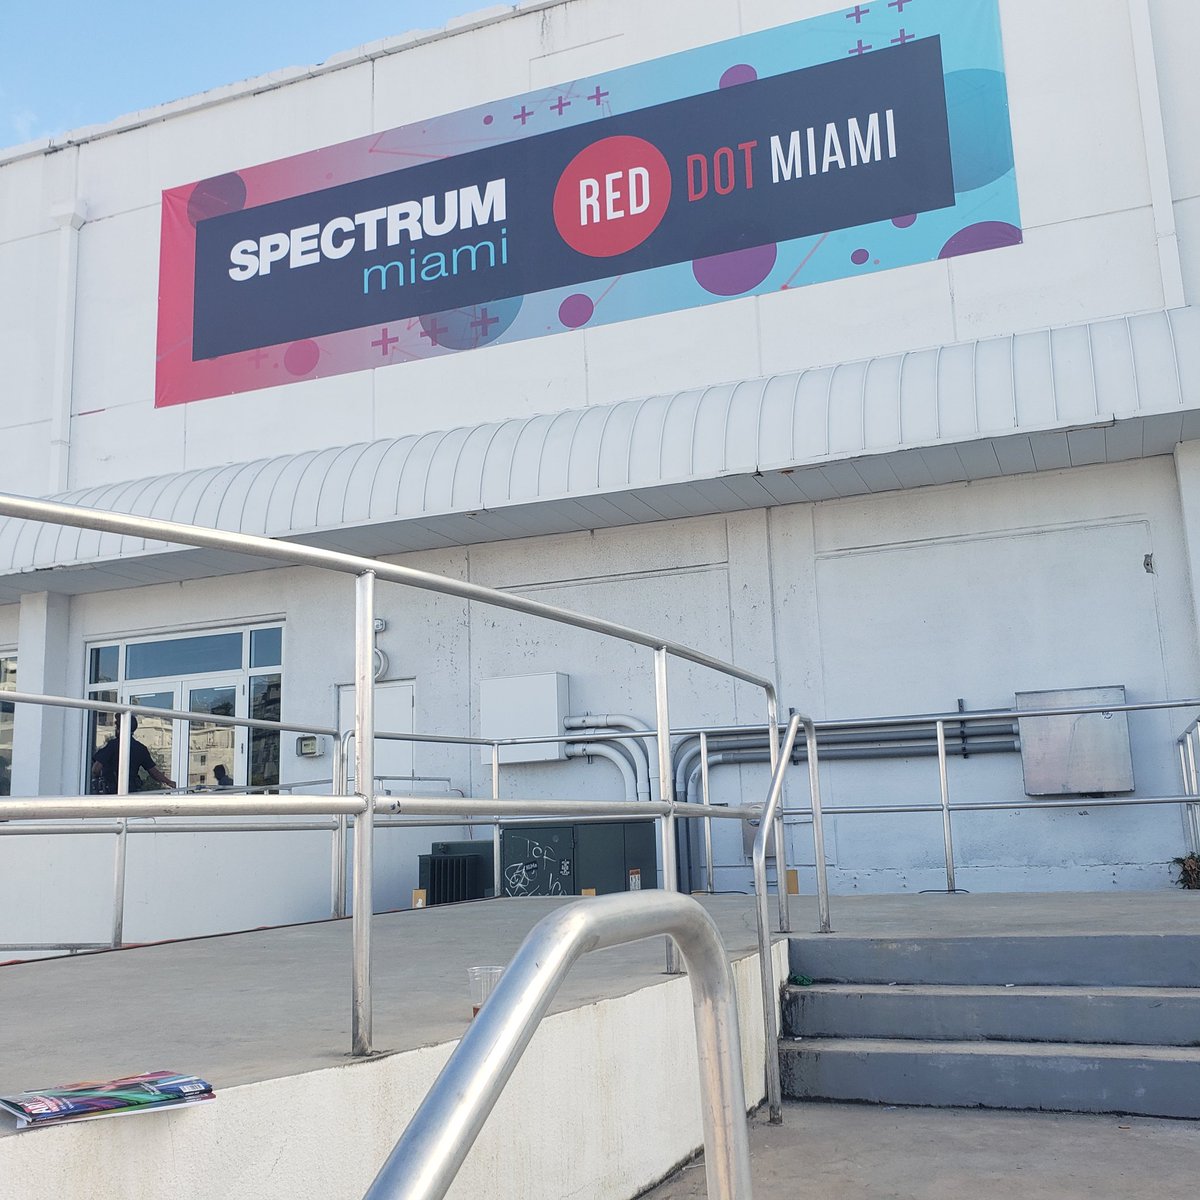 🔴 Red Dot Miami / 🎨 Spectrum Miami 2021at Mana Wynwood

#ArtBasel2021 #ArtBasel #Wynwood #WynwoodMiami #WynwoodArtDistrict #ManaWynwood #RedDotMiami #SpectrumMiami #SouthFlorida #Miami #Art #Artists #ArtistsonInstagram #Artwork #MiamiArtWeek #SundayVibes